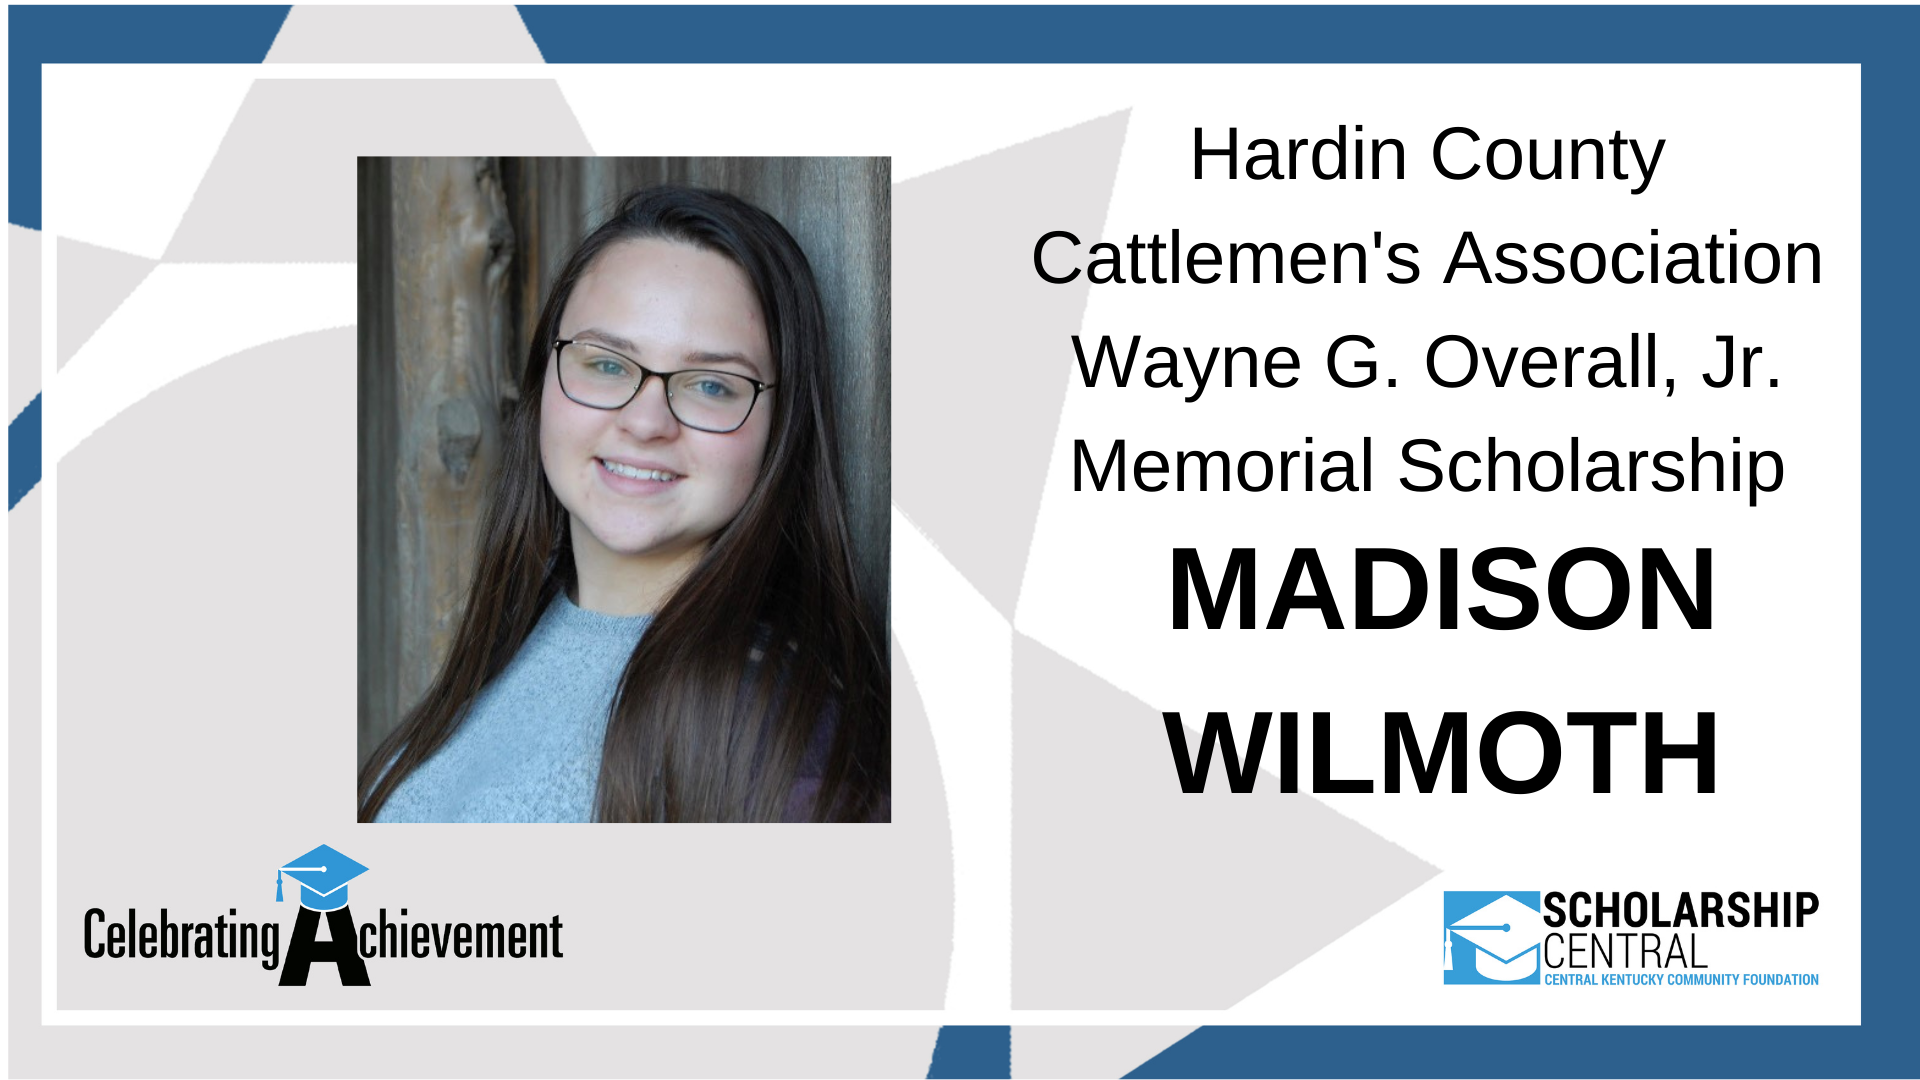 Hardin County Cattlemens Association Scholarship Winner